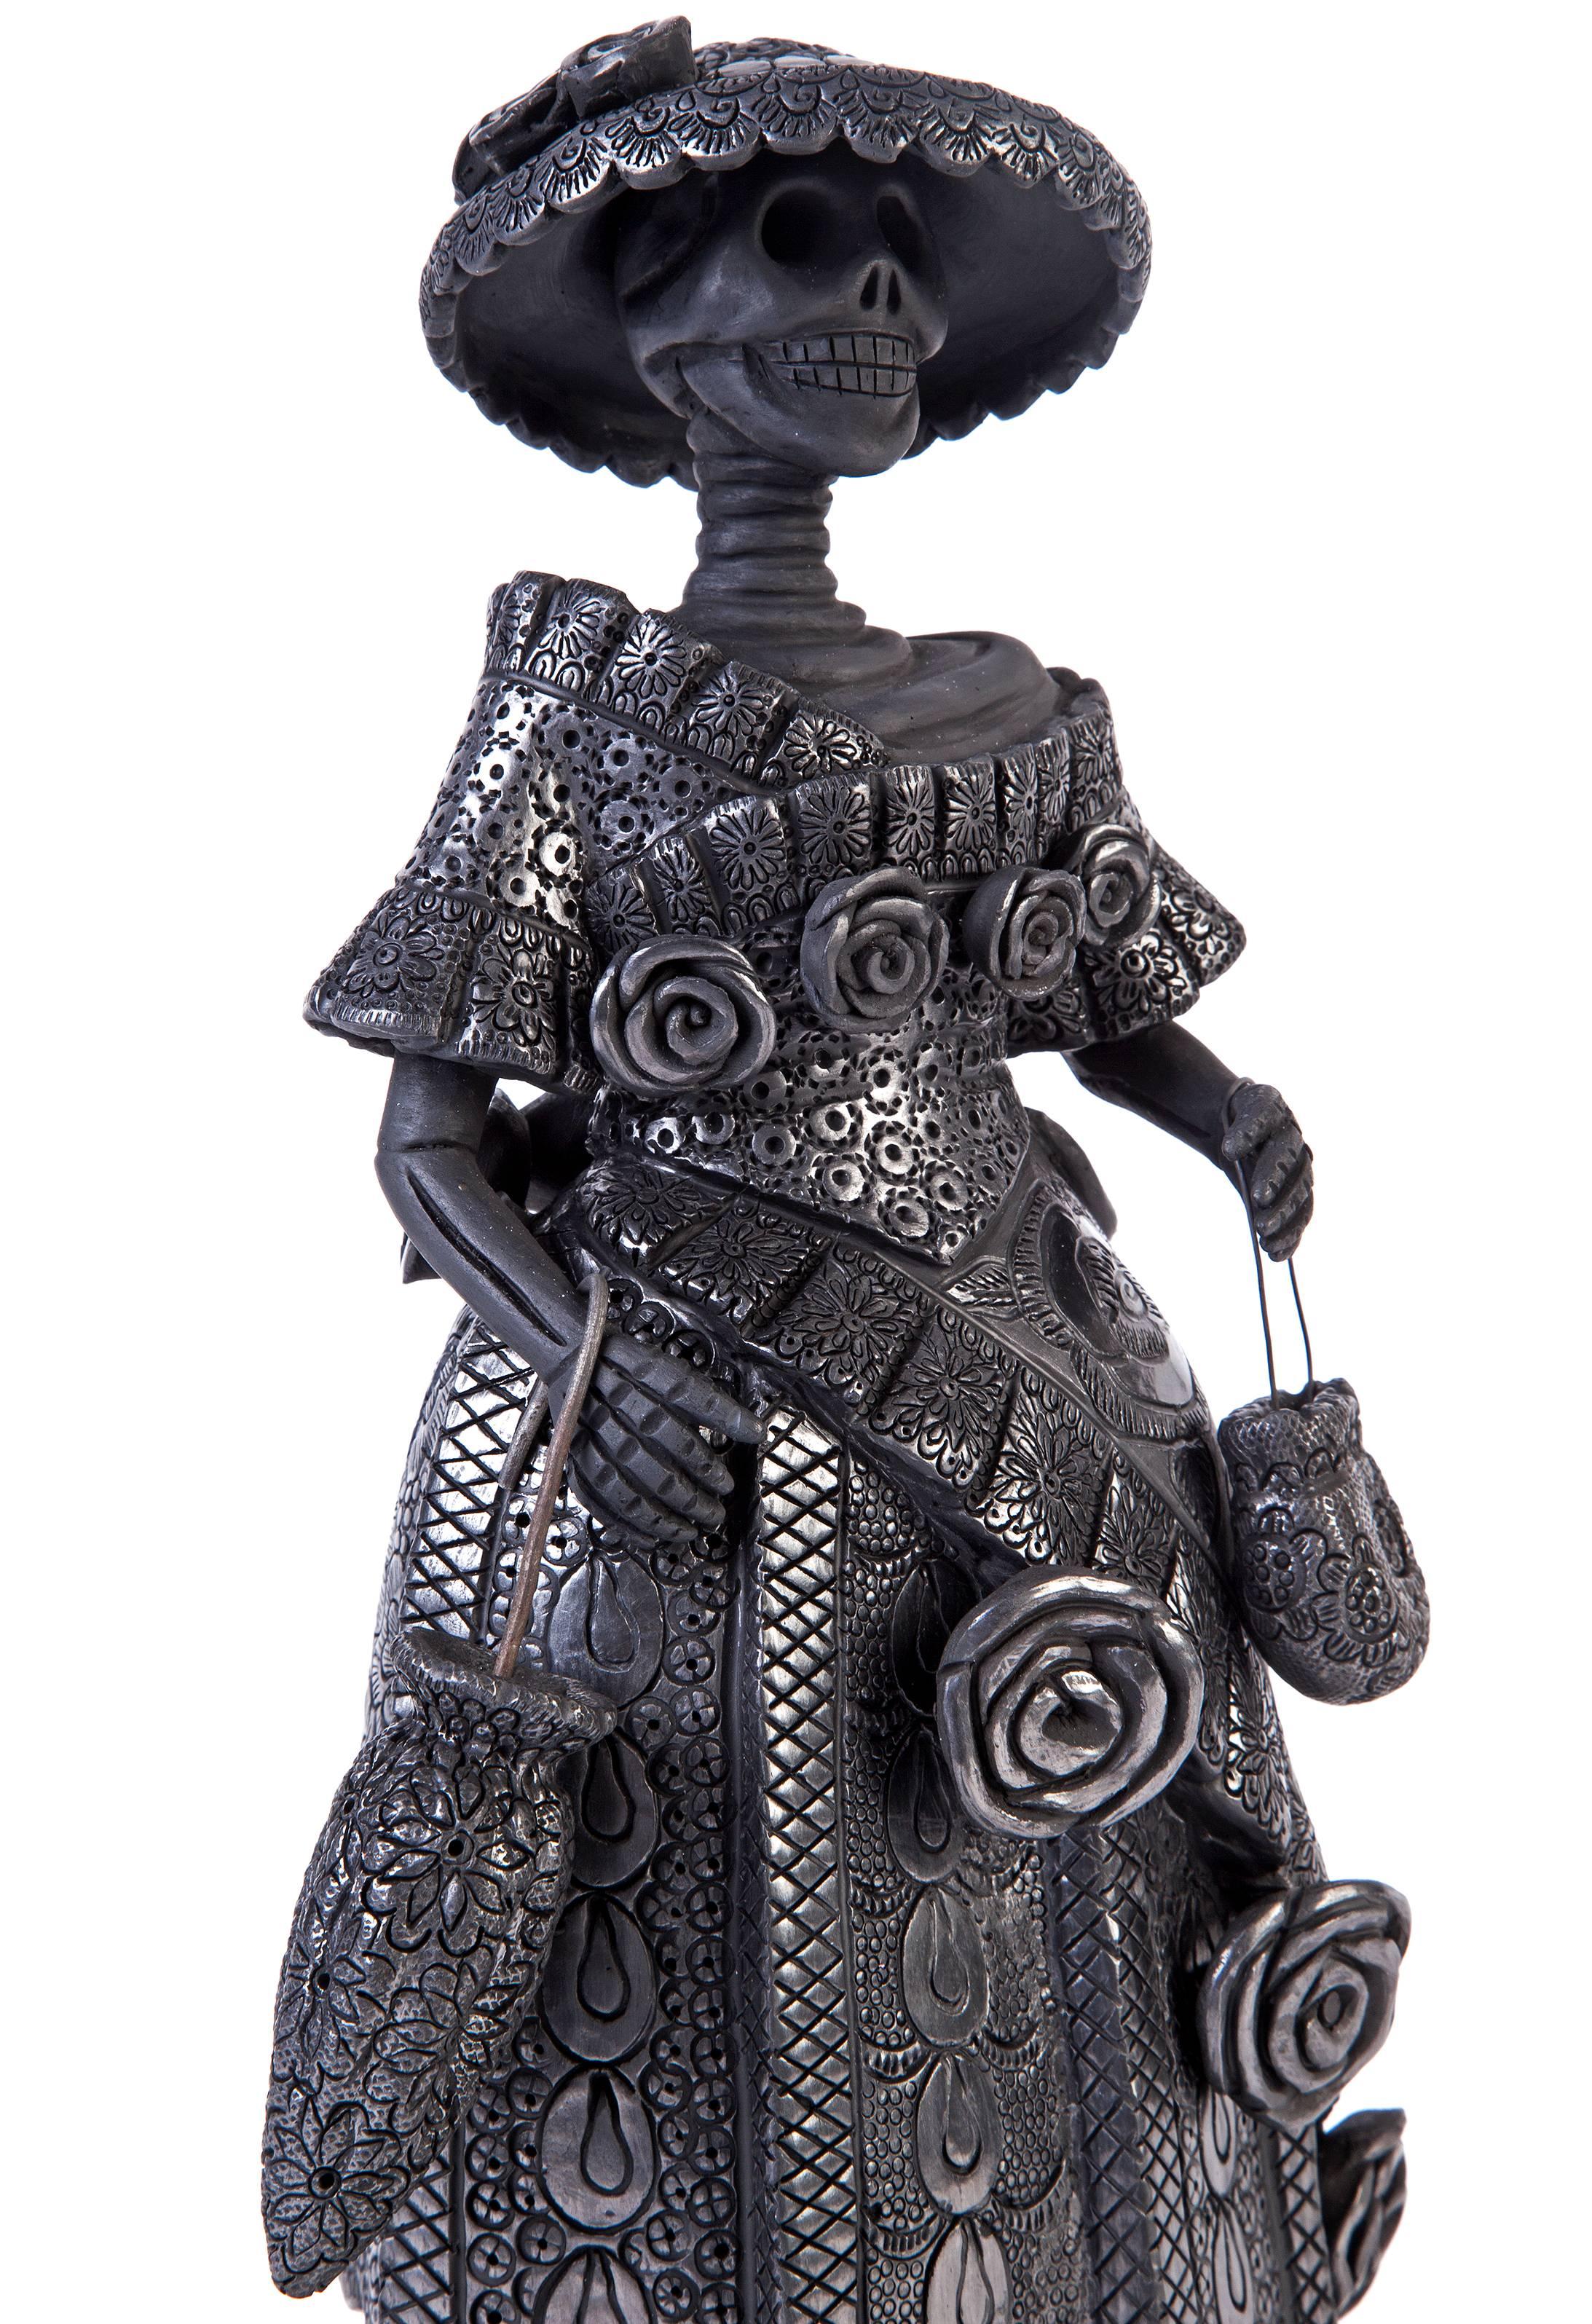 Magdalena Pedro Martinez Abstract Sculpture - 6'' Catrina Oaxaqueña / Ceramics Black Clay Mexican Folk Art